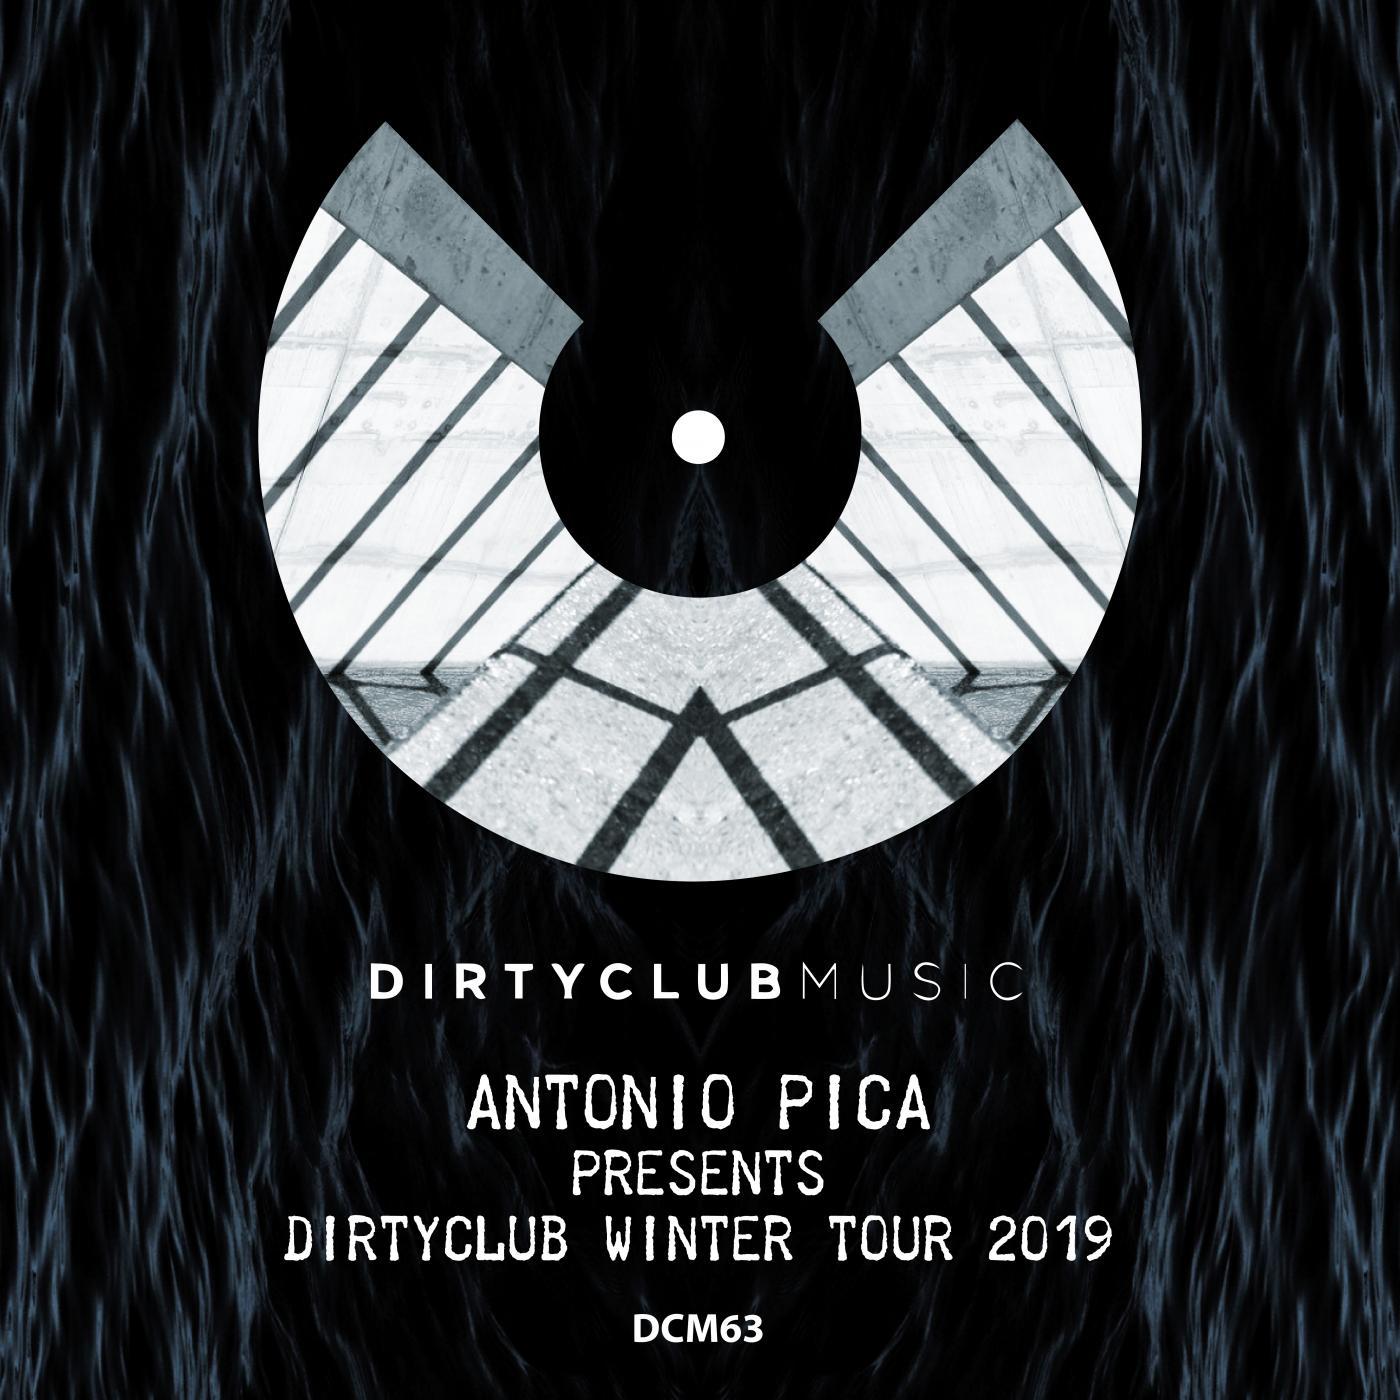 ANTONIO PICA presents DIRTYCLUB WINTER TOUR 2019